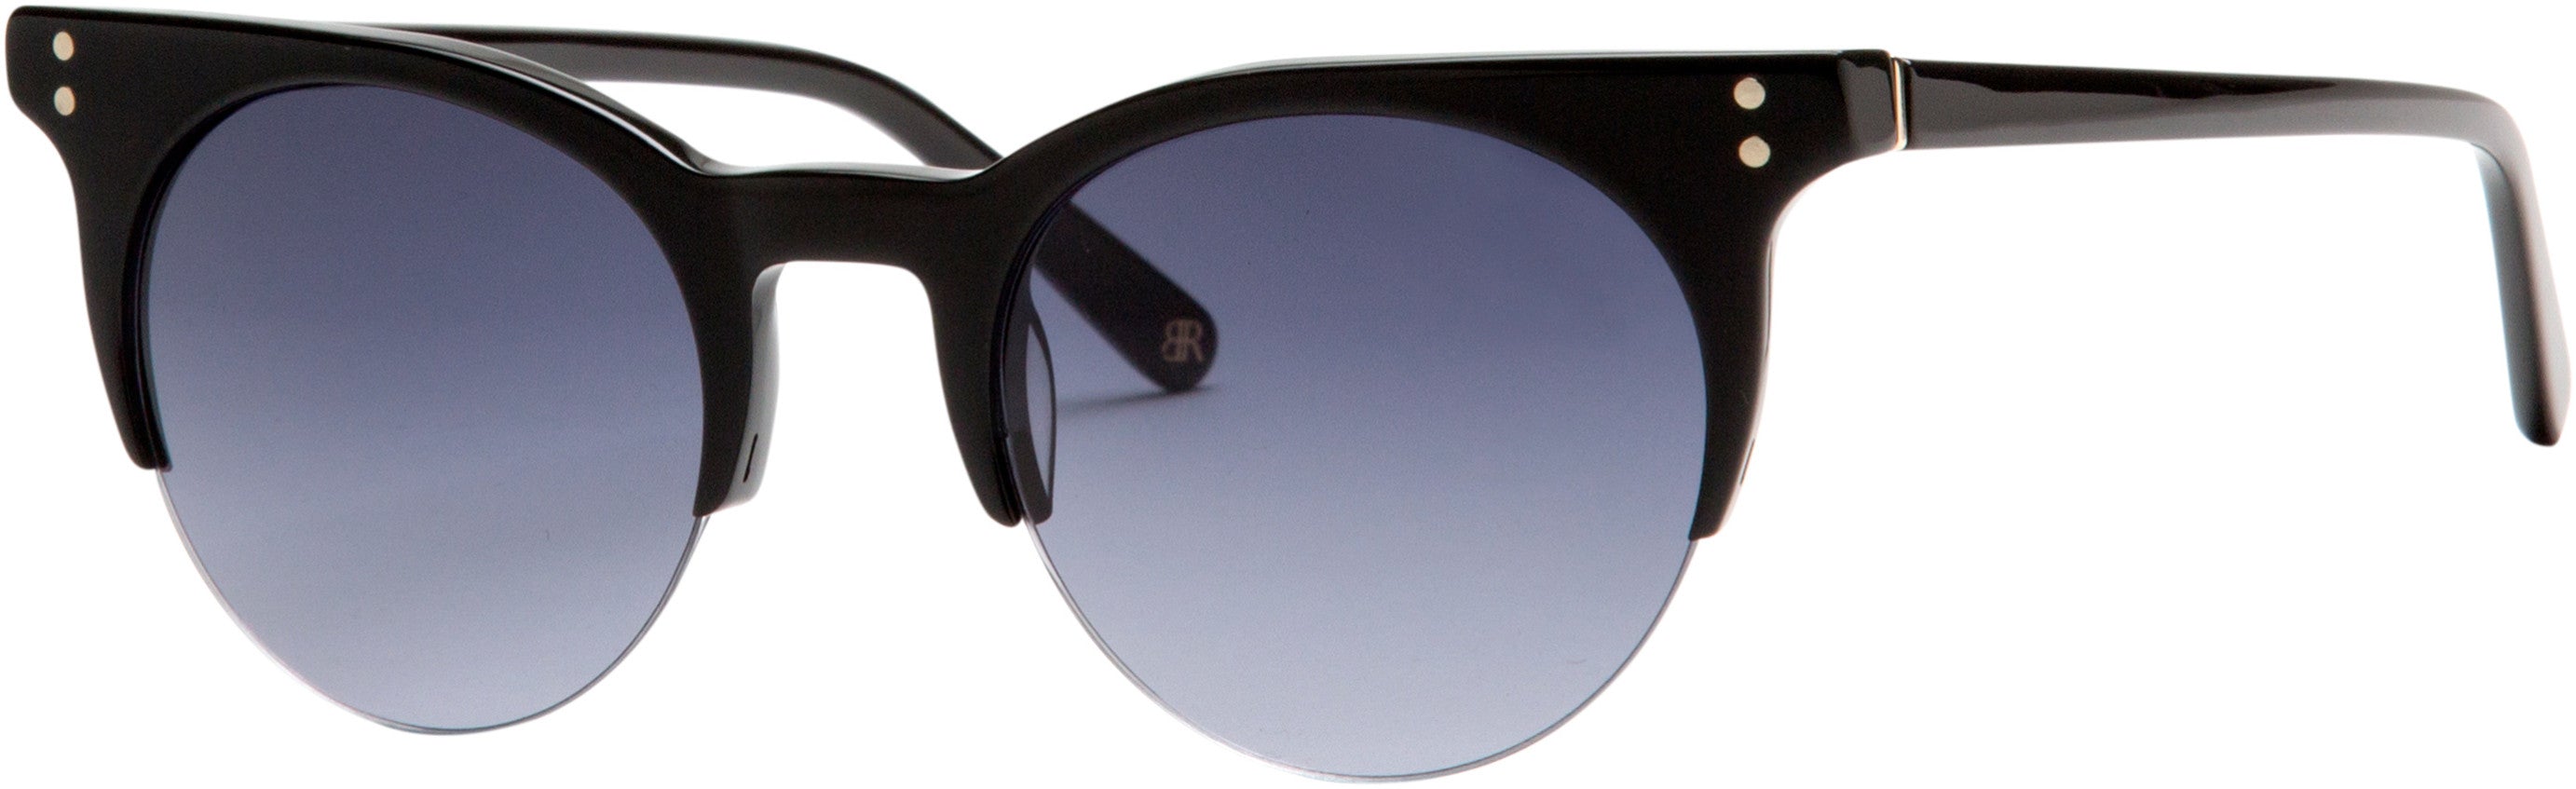 Banana Republic Stevie/S Oval Modified Sunglasses 0807-0807  Black (9O Dark Gray Gradient)